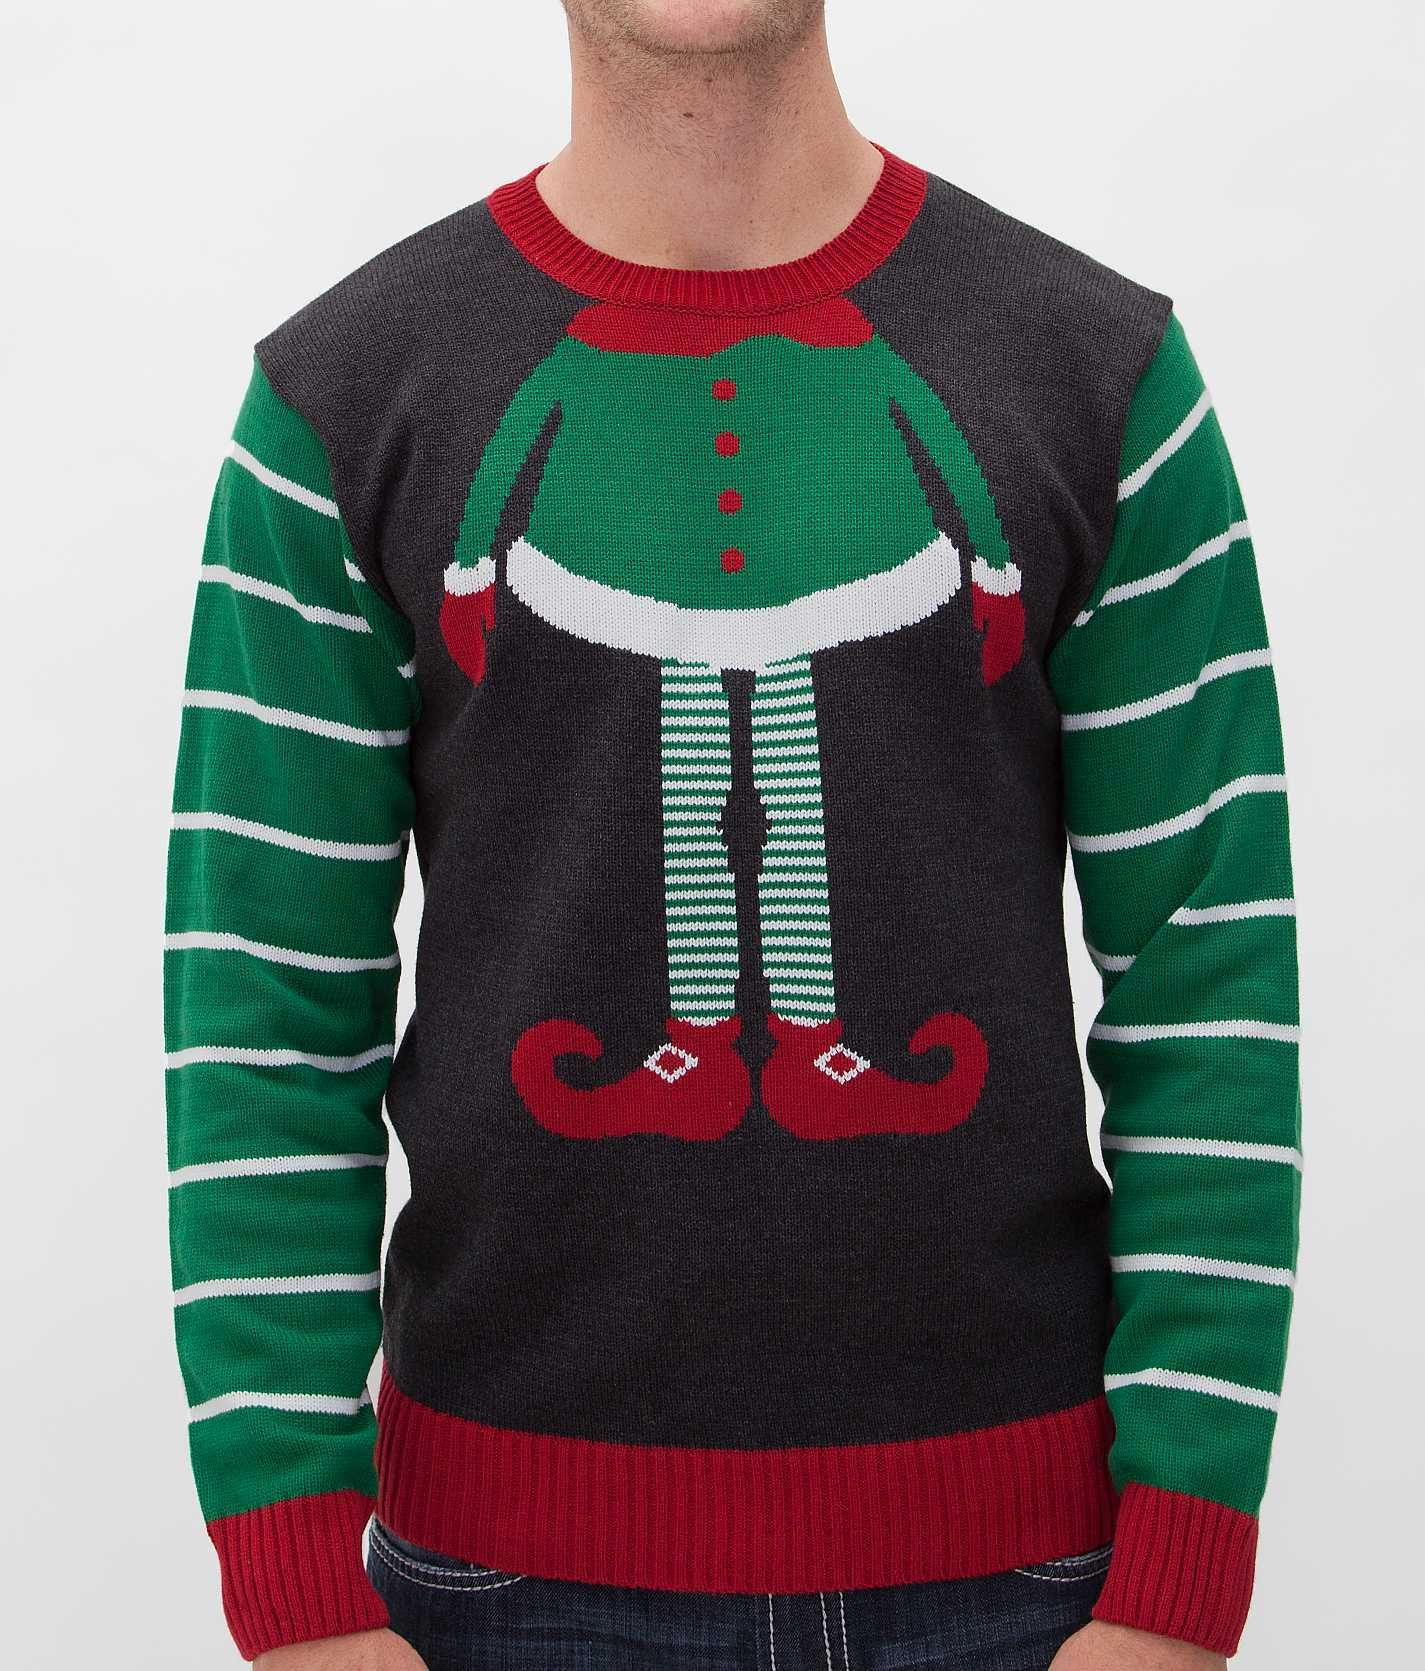 Ugly sweater christmas